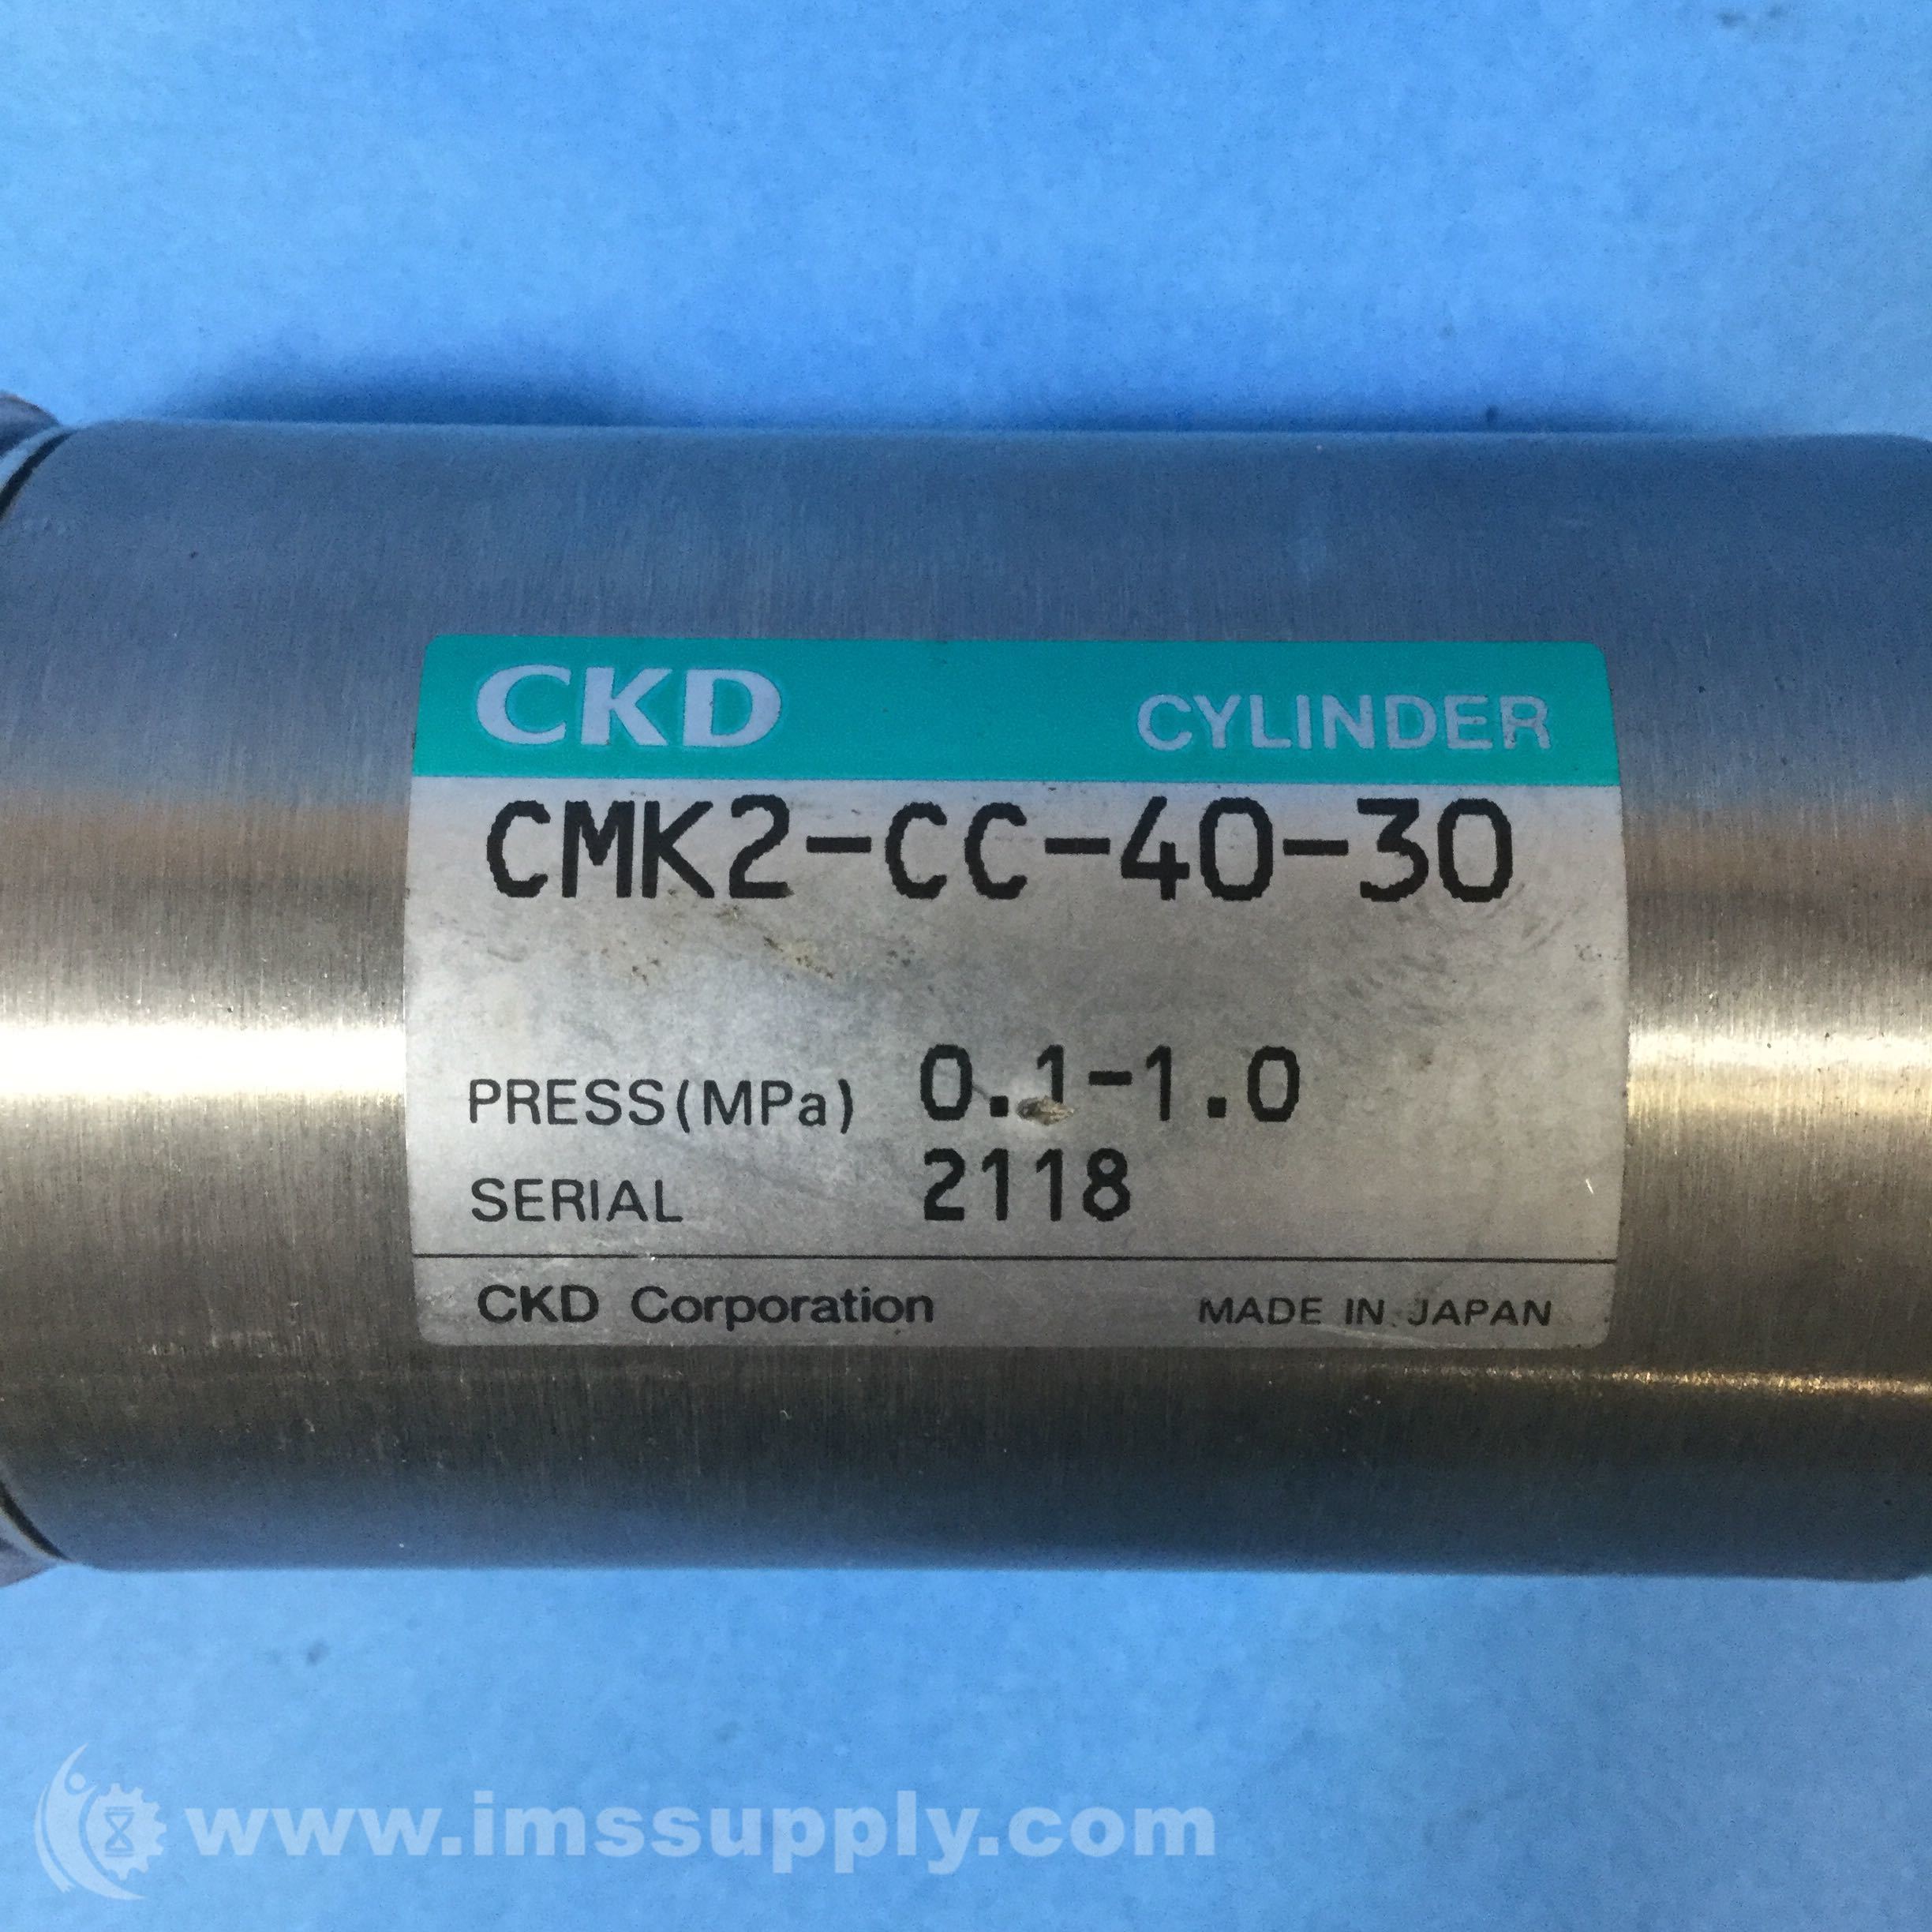 Ckd Corp CMK2-CC-40-30 Medium Bore Size Cylinder, Stainless Steel 